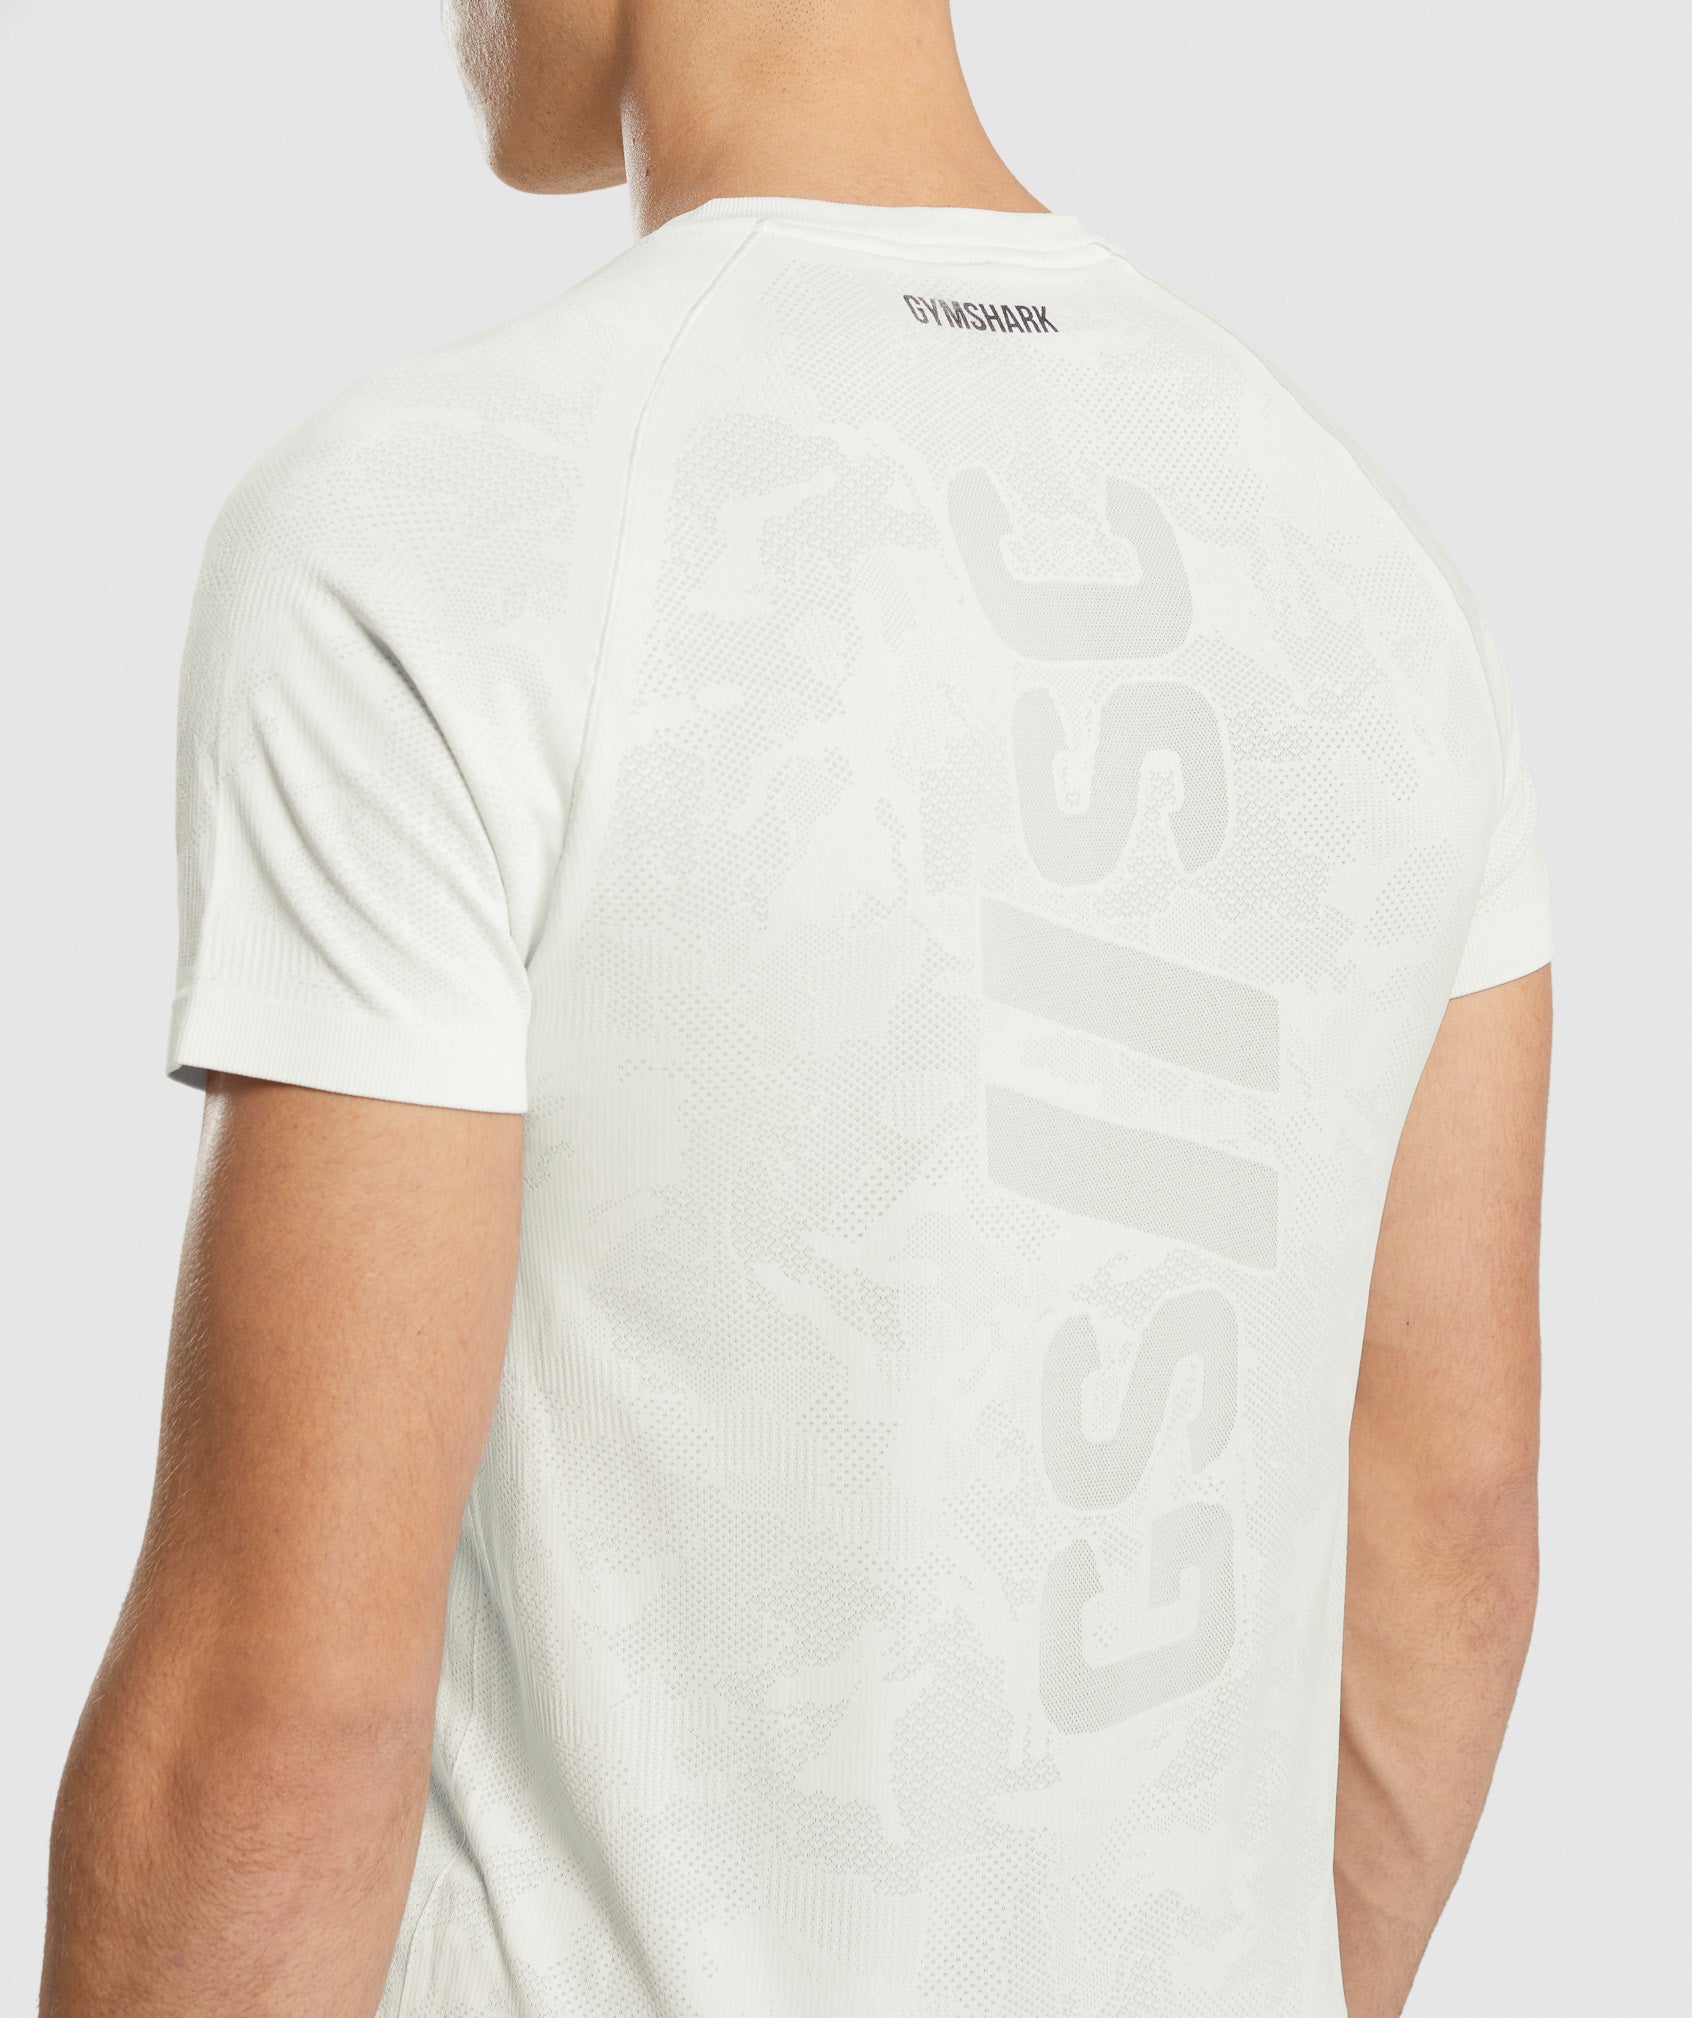 Gymshark//Steve Cook Seamless T-Shirt in Off White/Light Grey - view 5